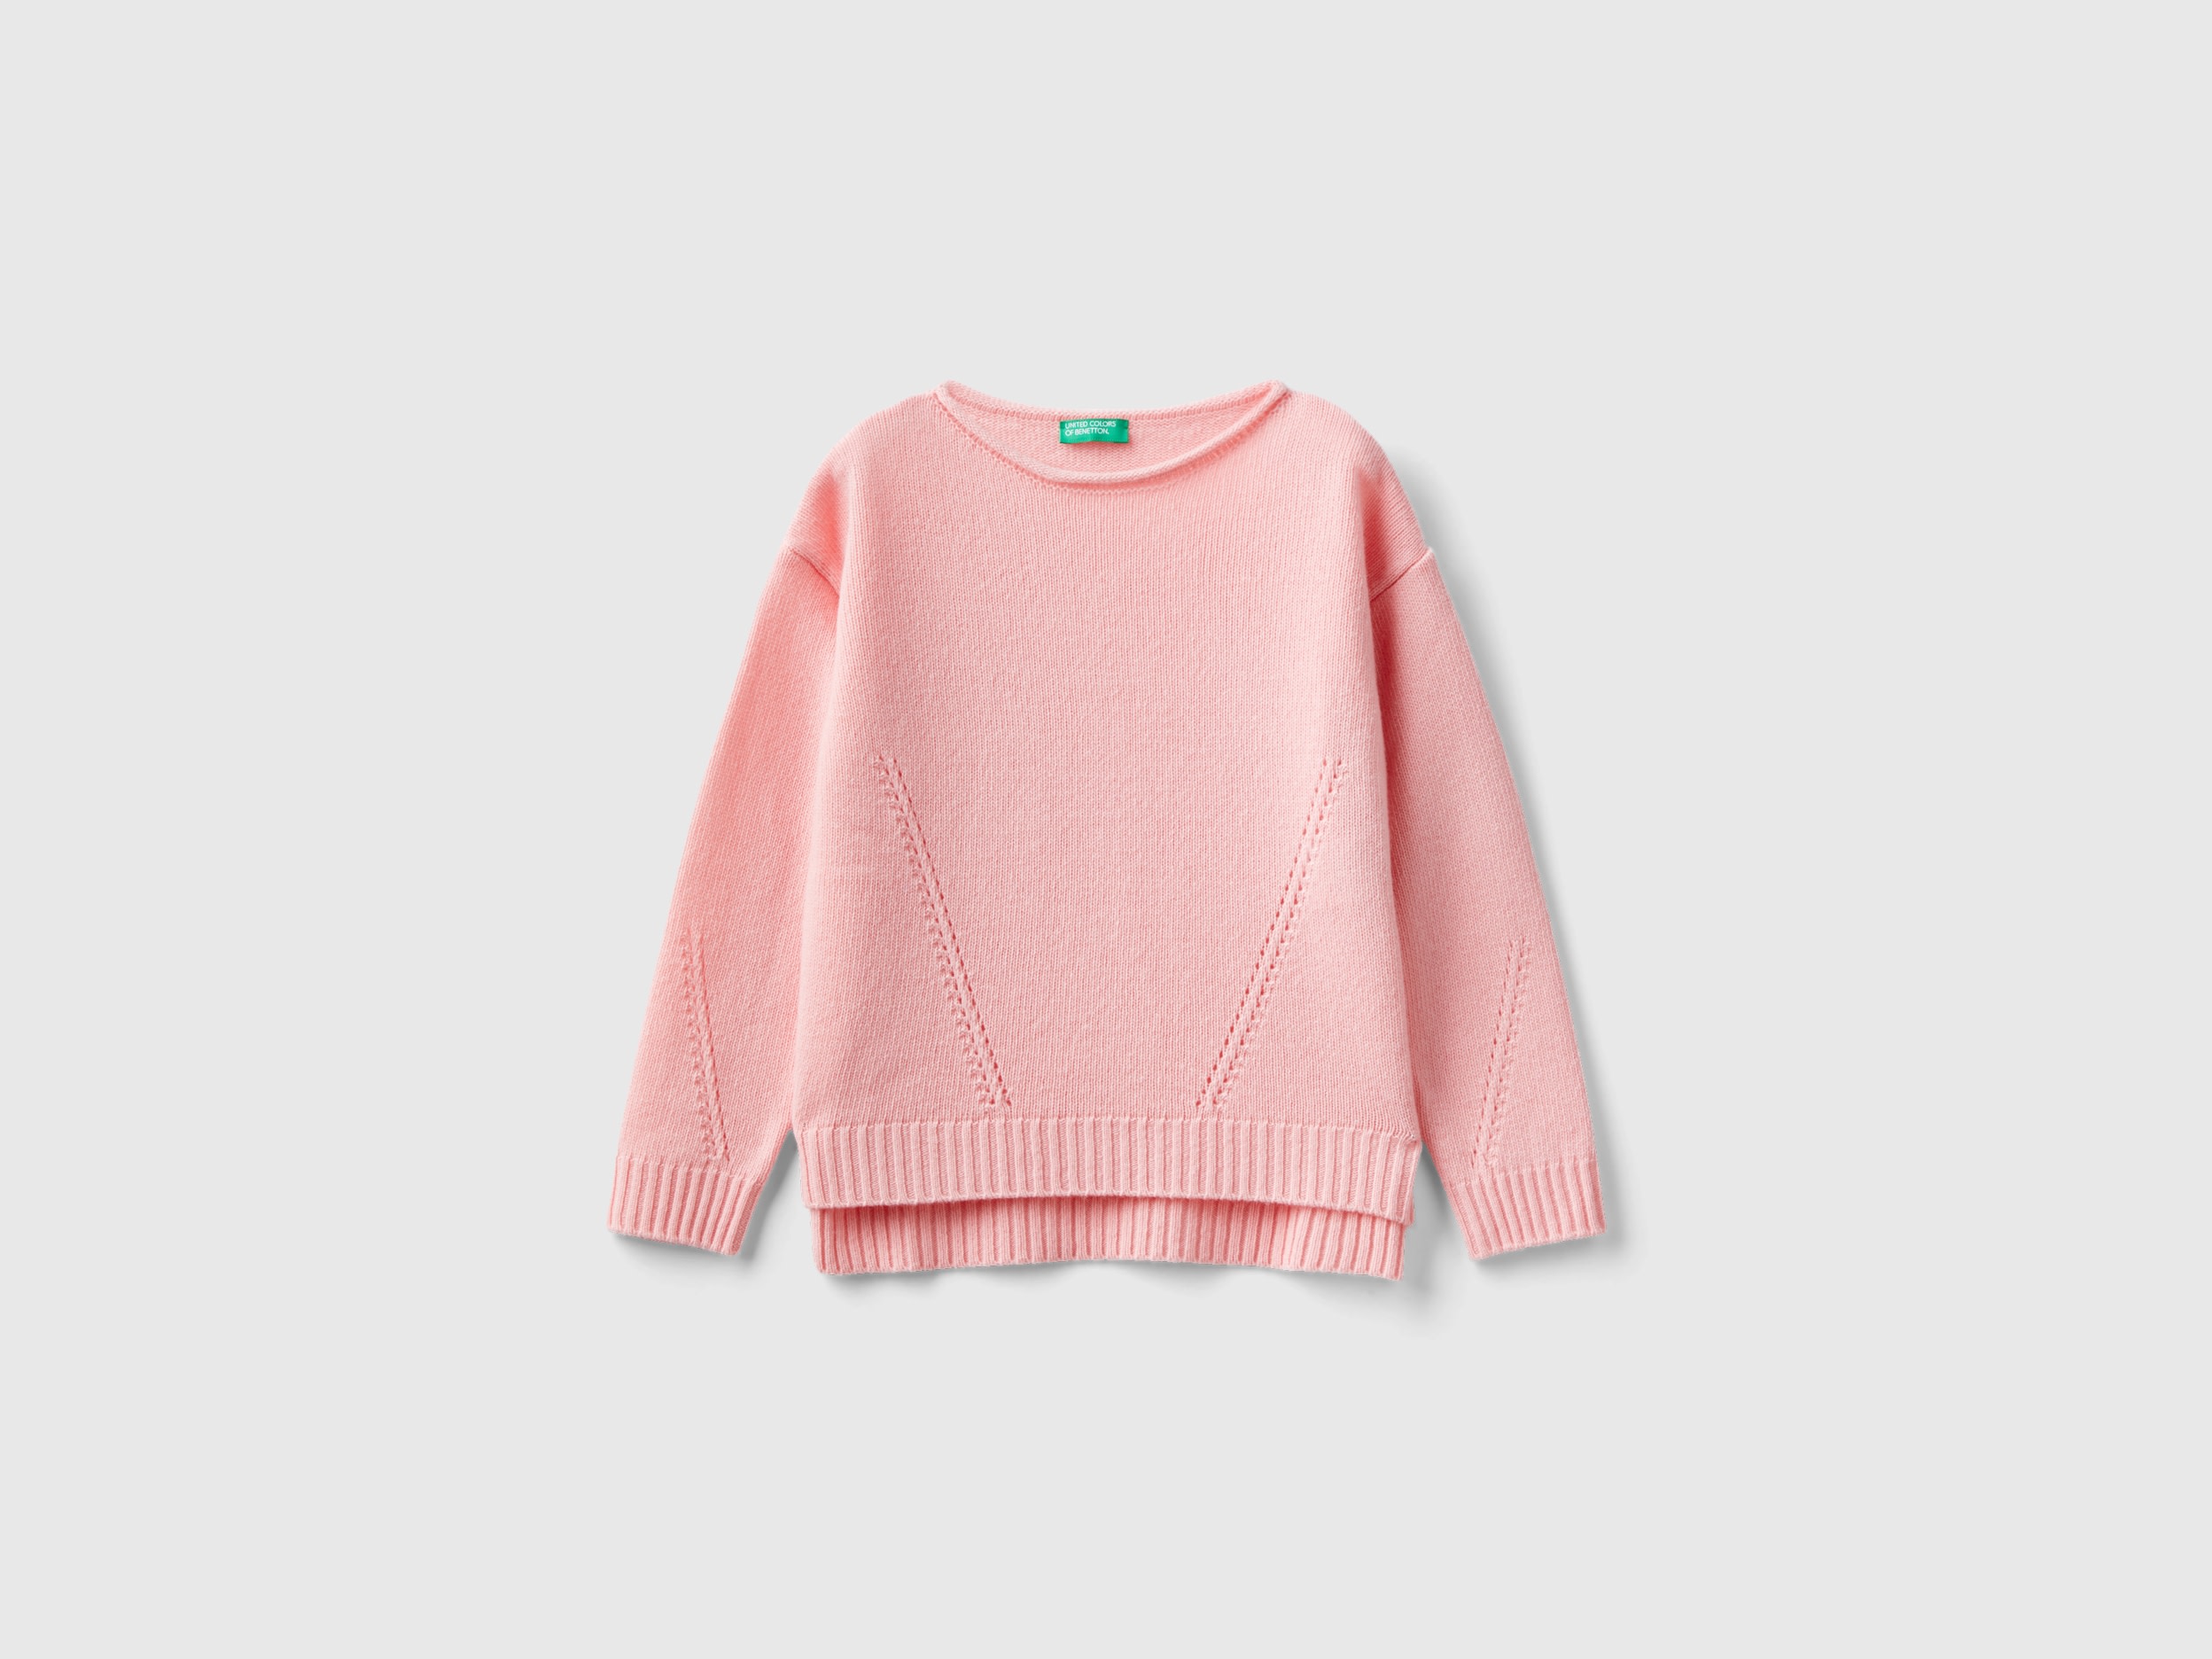 Benetton, Knit Sweater With Playful Stitching, size XL, Pink, Kids